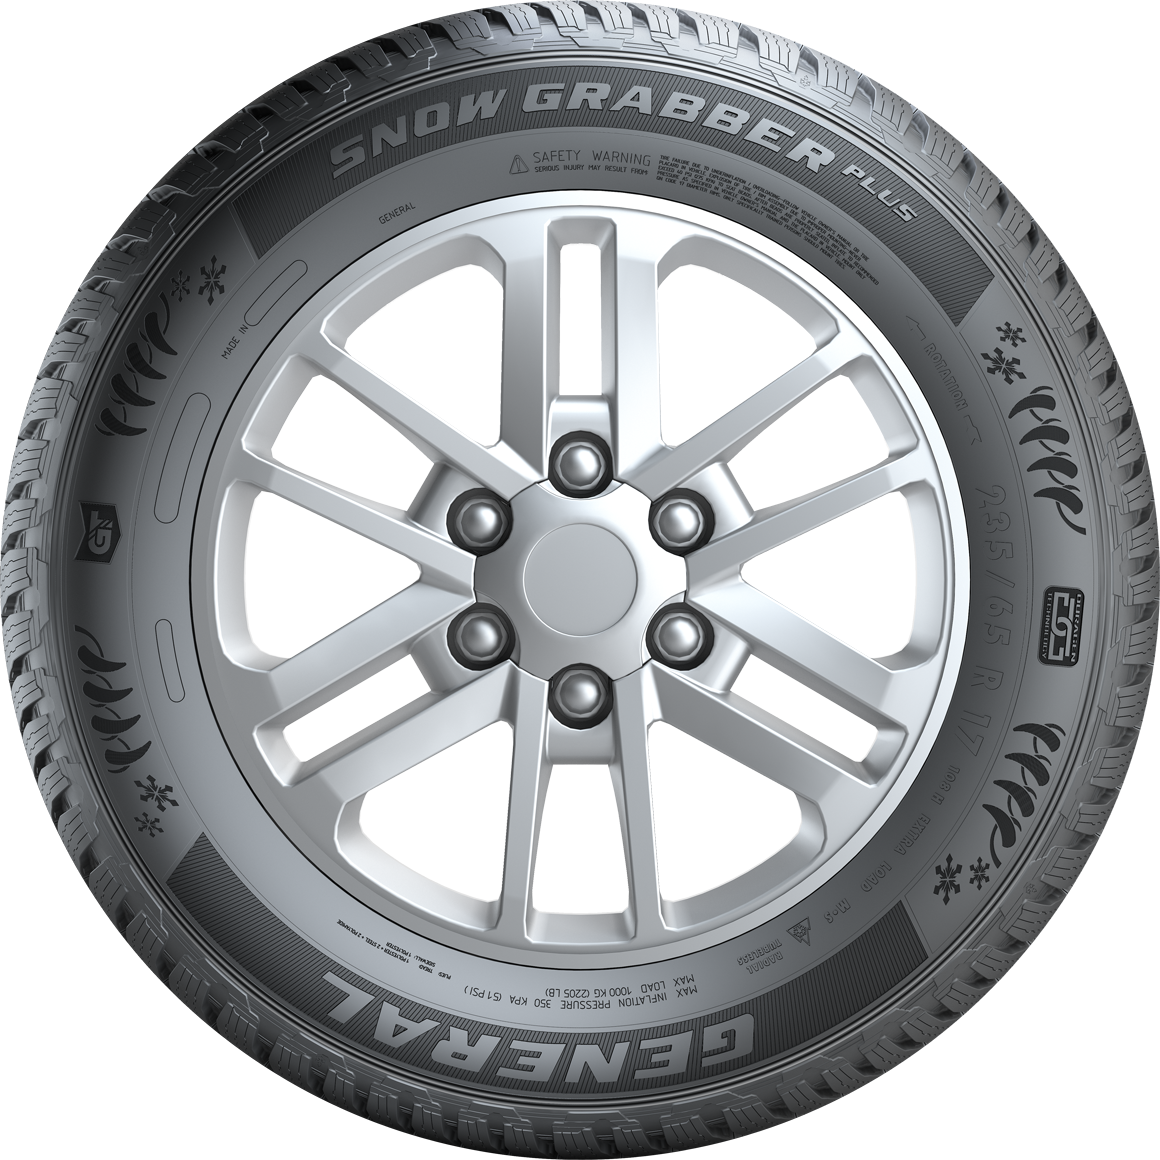 General Tire Snow Grabber Plus 245/70R16 107T - KolayOto